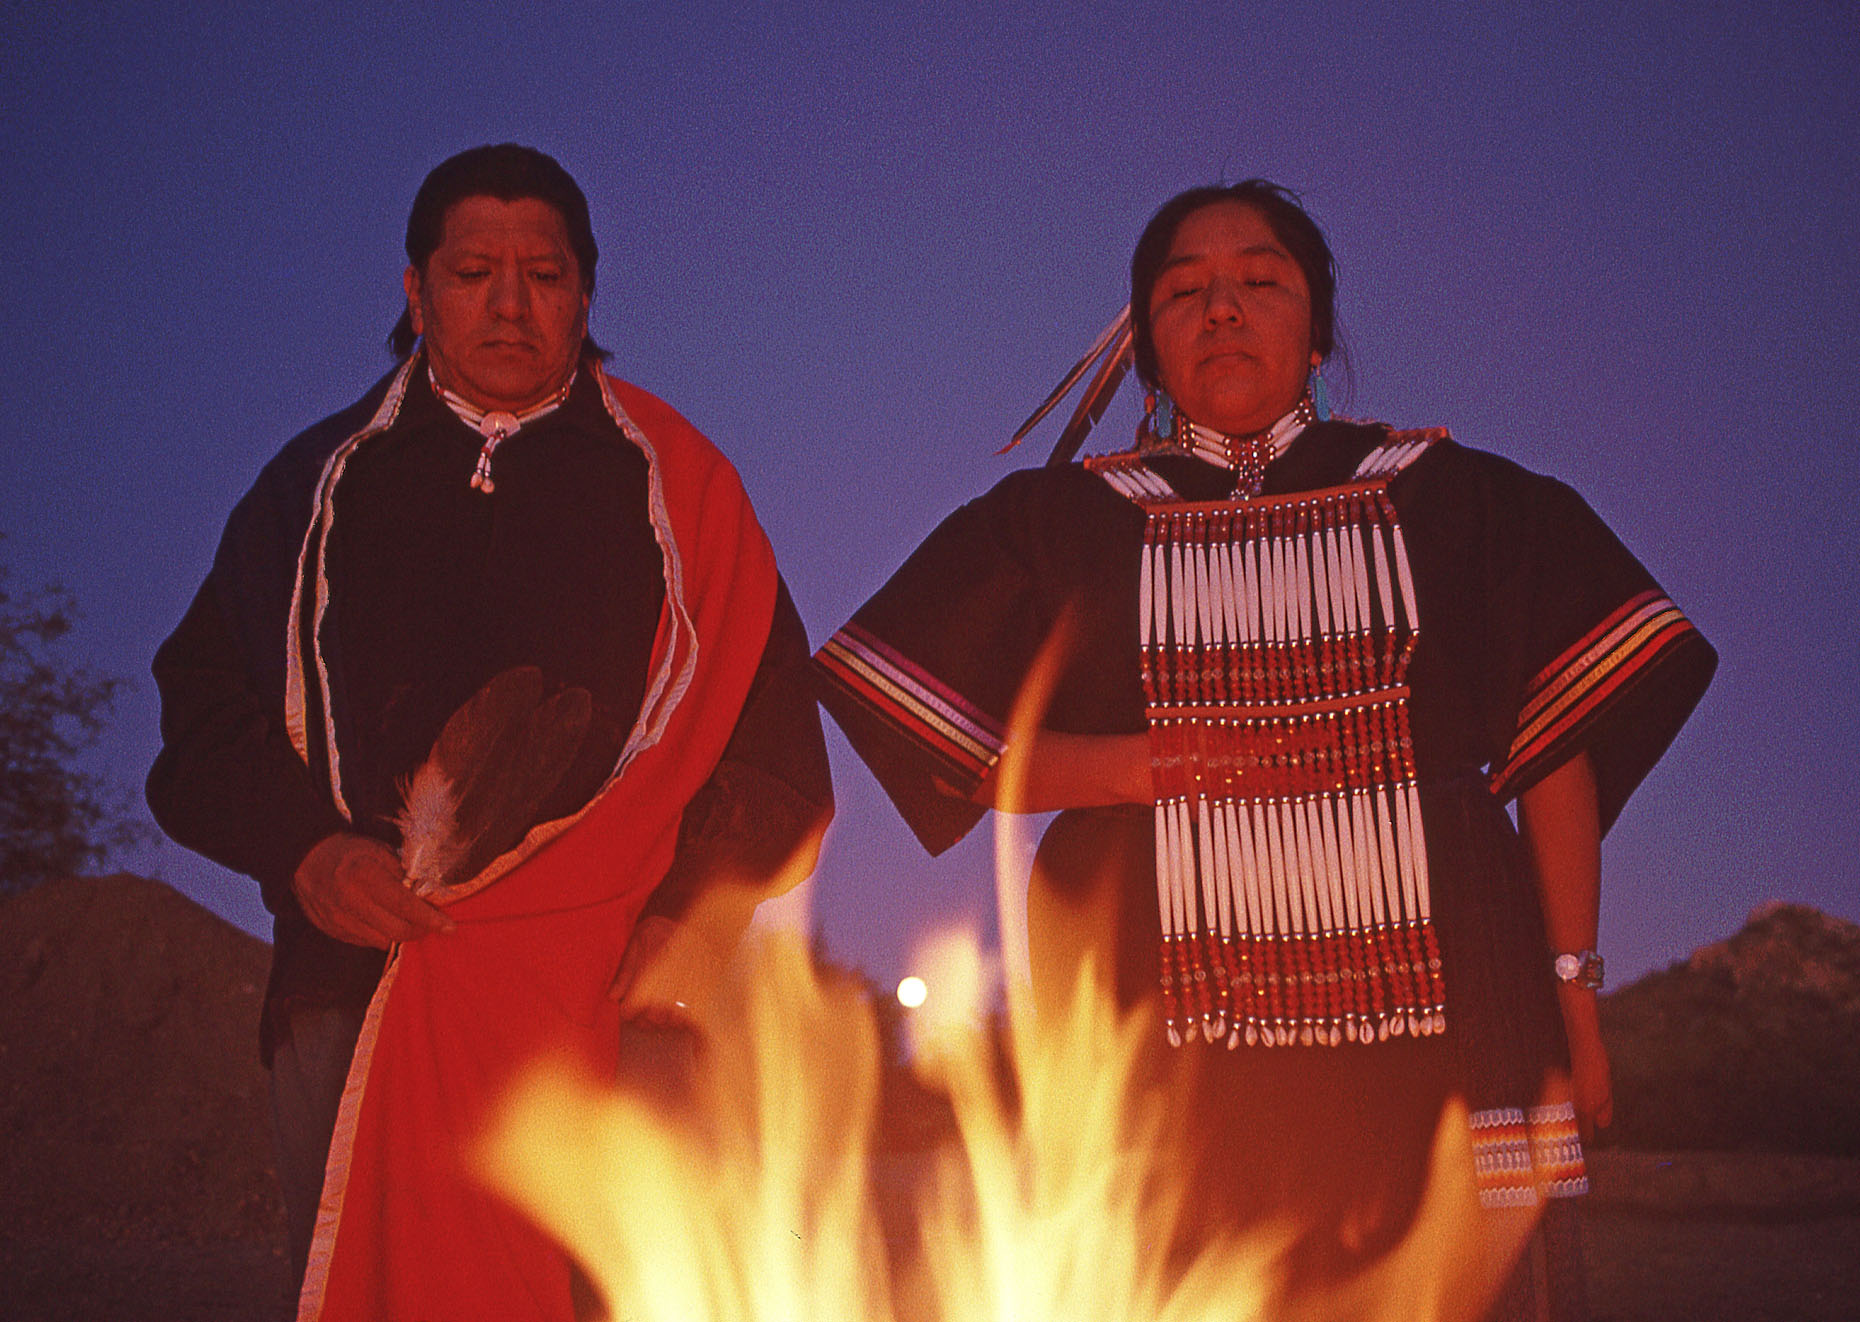 Kiowa Medicine man and woman, John Annerino, Native American traditions, Sonoran Desert, AZ